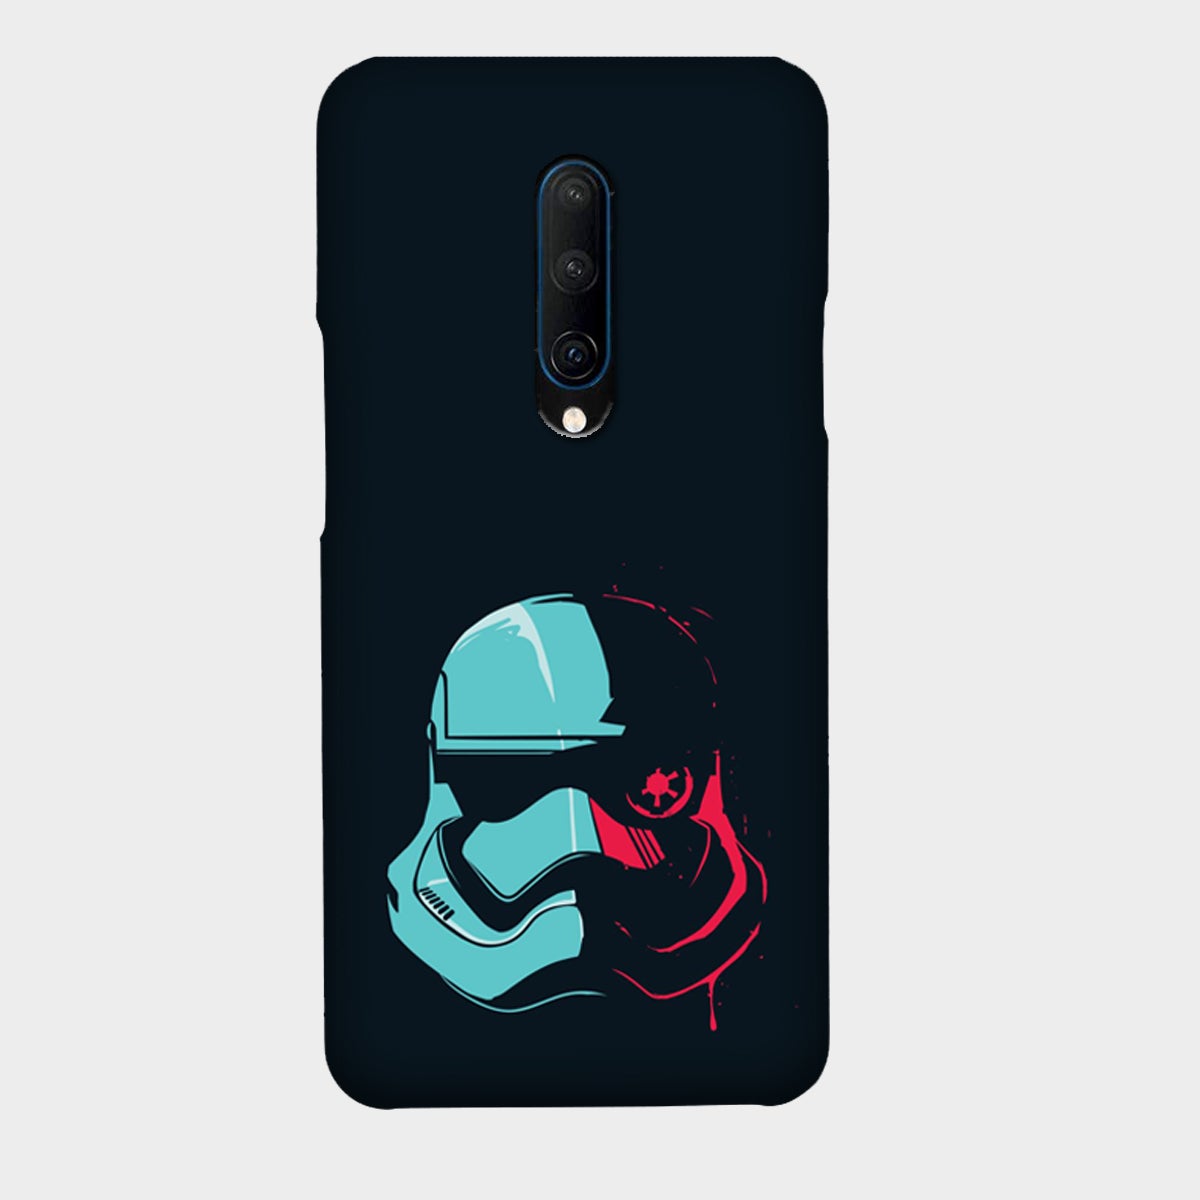 Star Wars - Darth Vader - Multi Color - Mobile Phone Cover - Hard Case - OnePlus